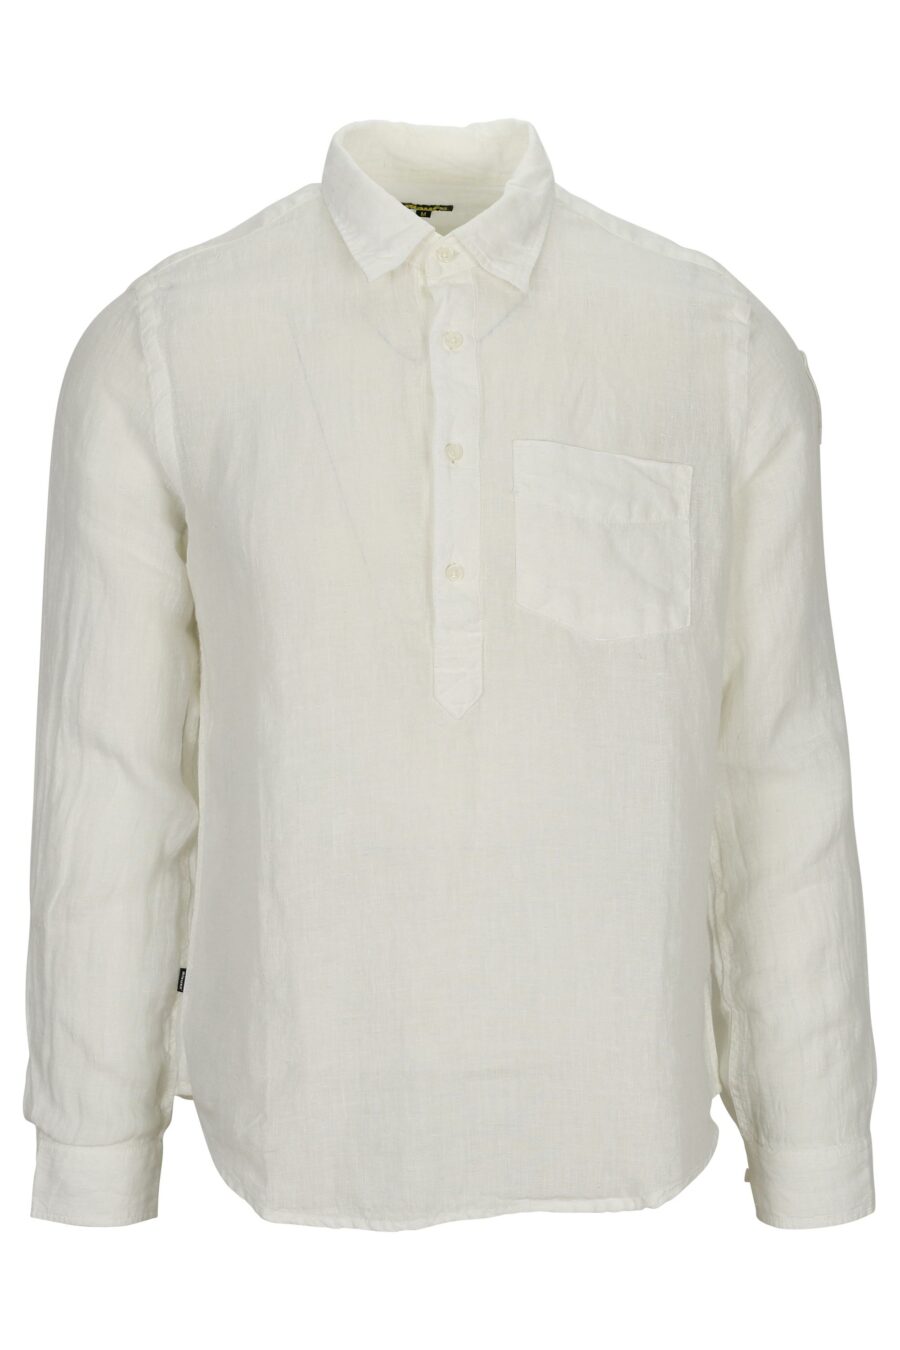 White shirt with mini-logo shield - 8058610776718